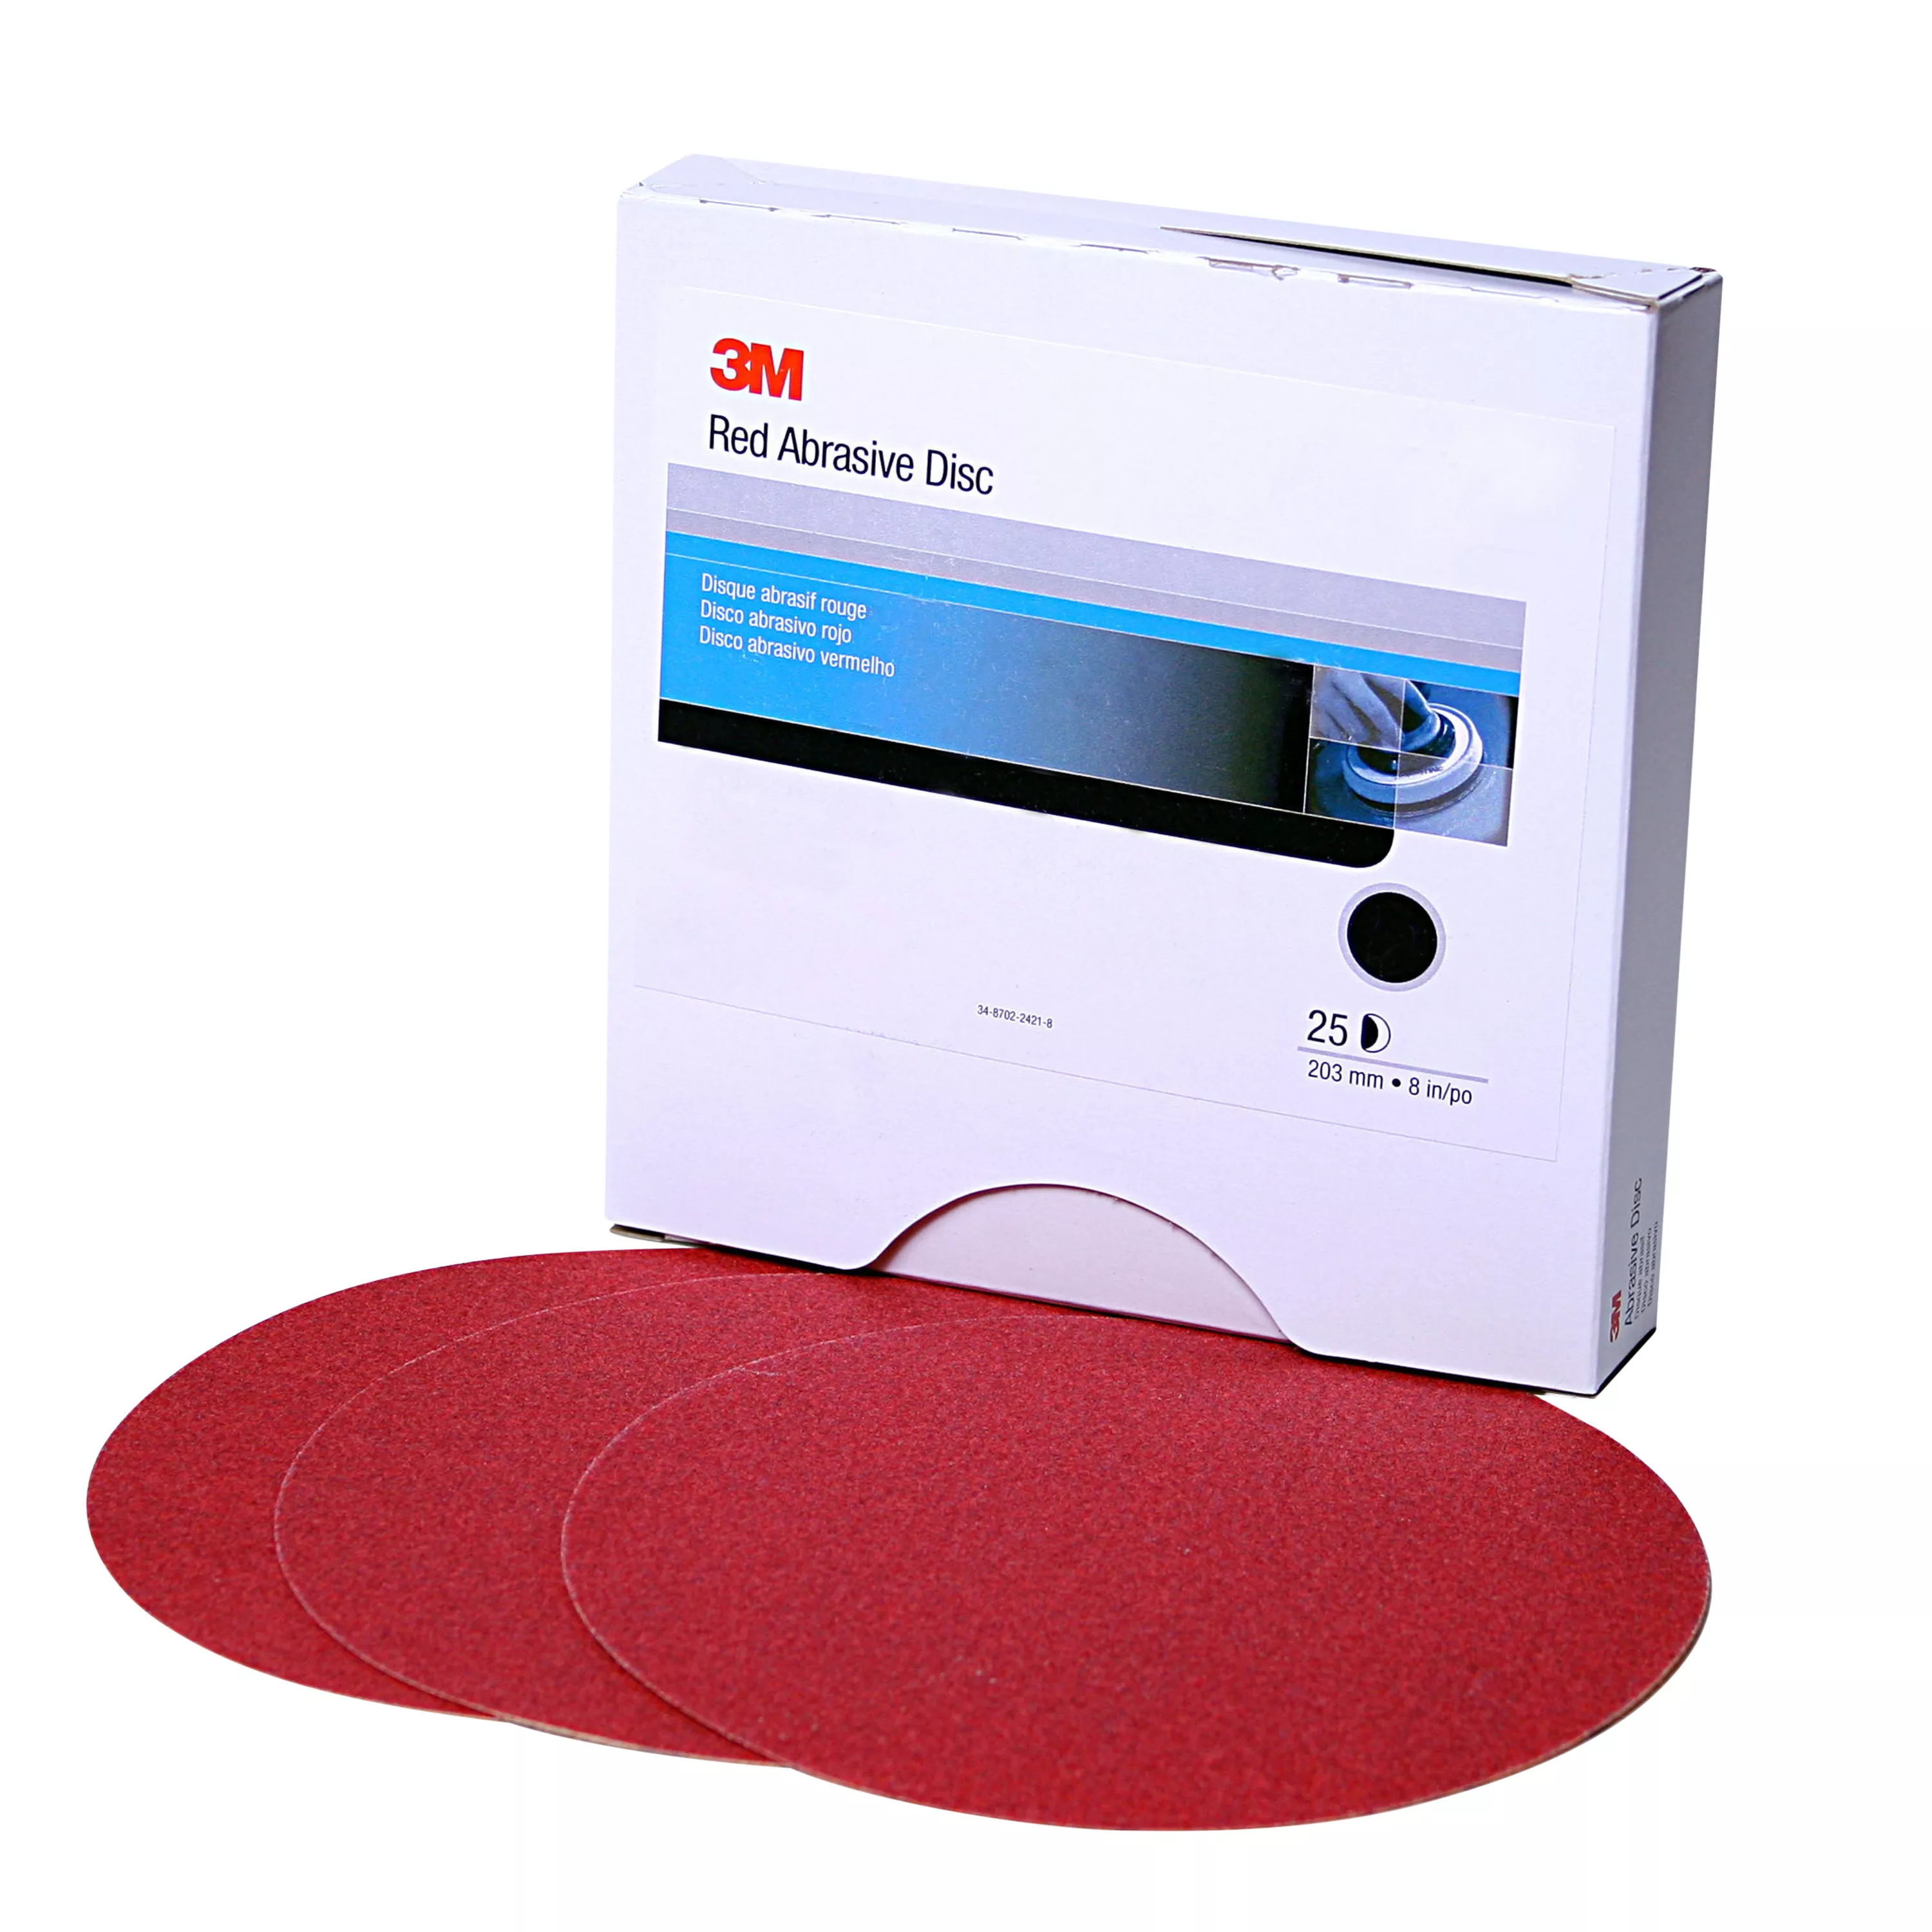 3M™ Red Abrasive Stikit™ Disc, 01100, 8 in, P80, 25 discs per carton, 5
cartons per case